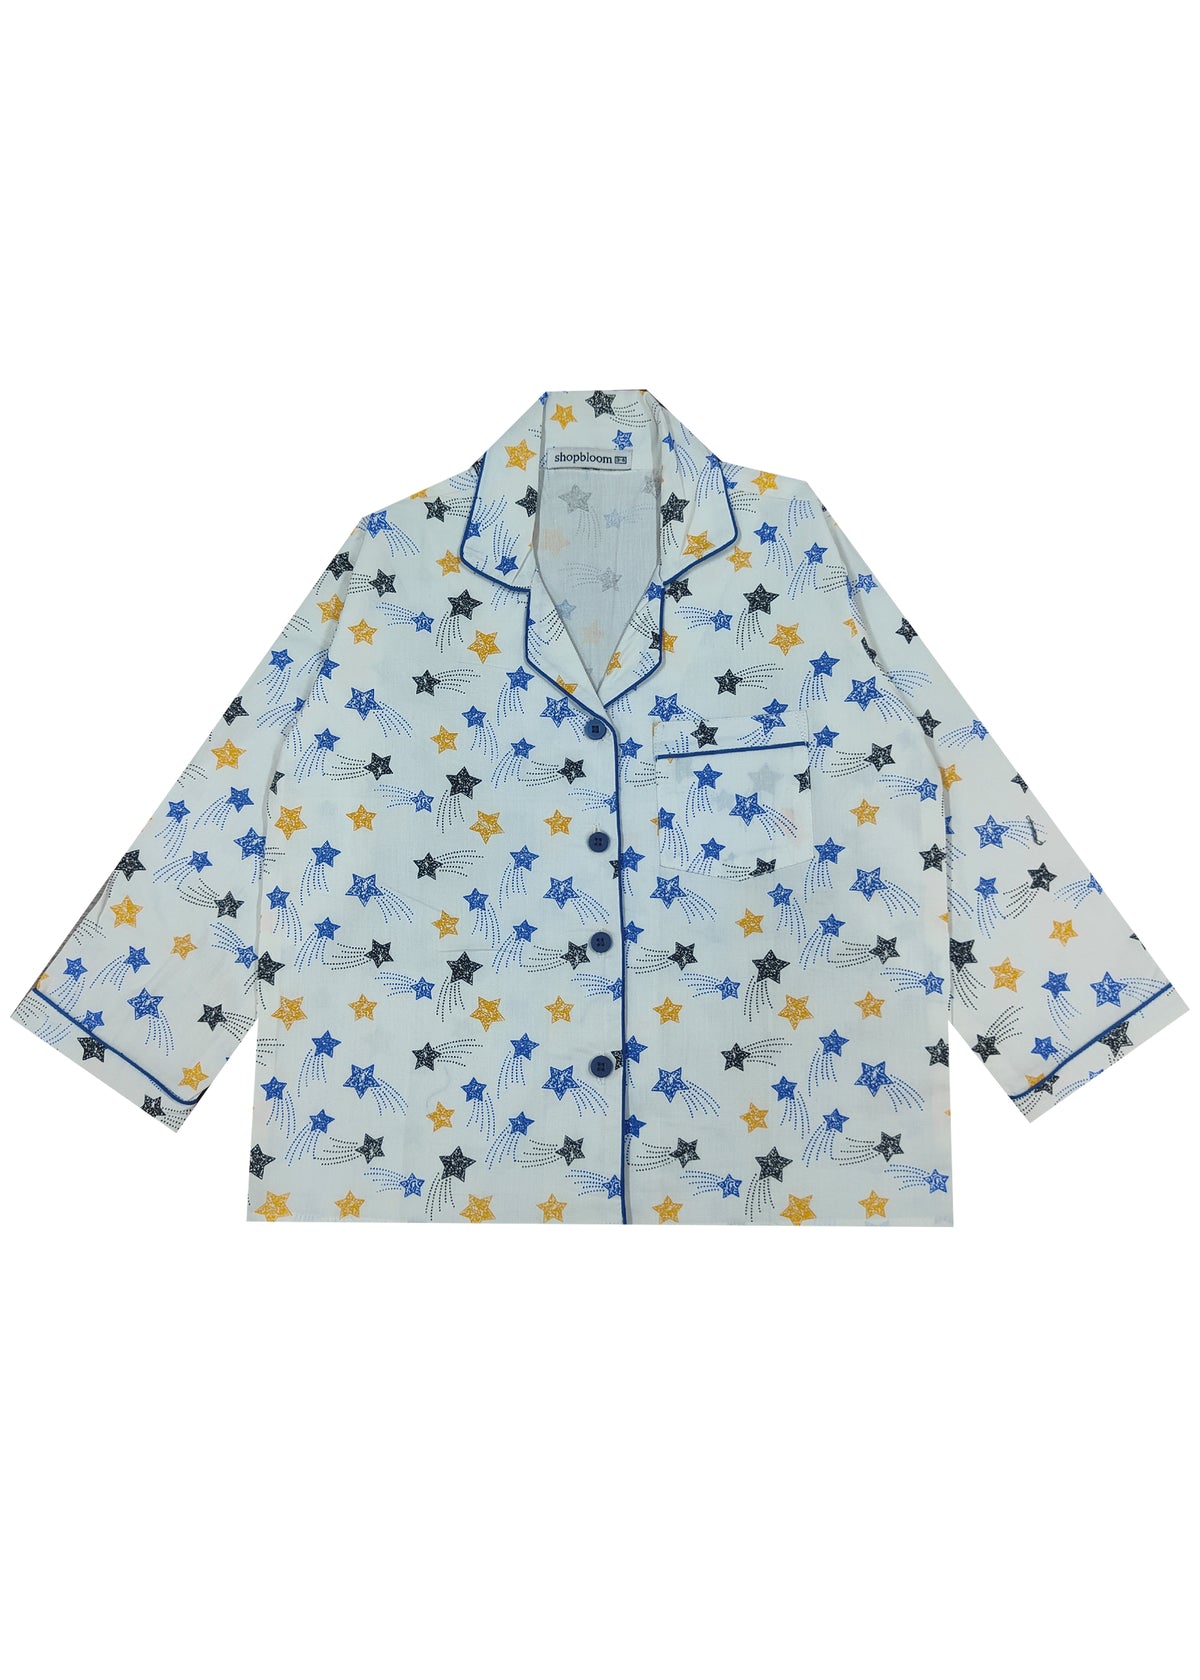 Starry Print Long Sleeve Kids Night Suit